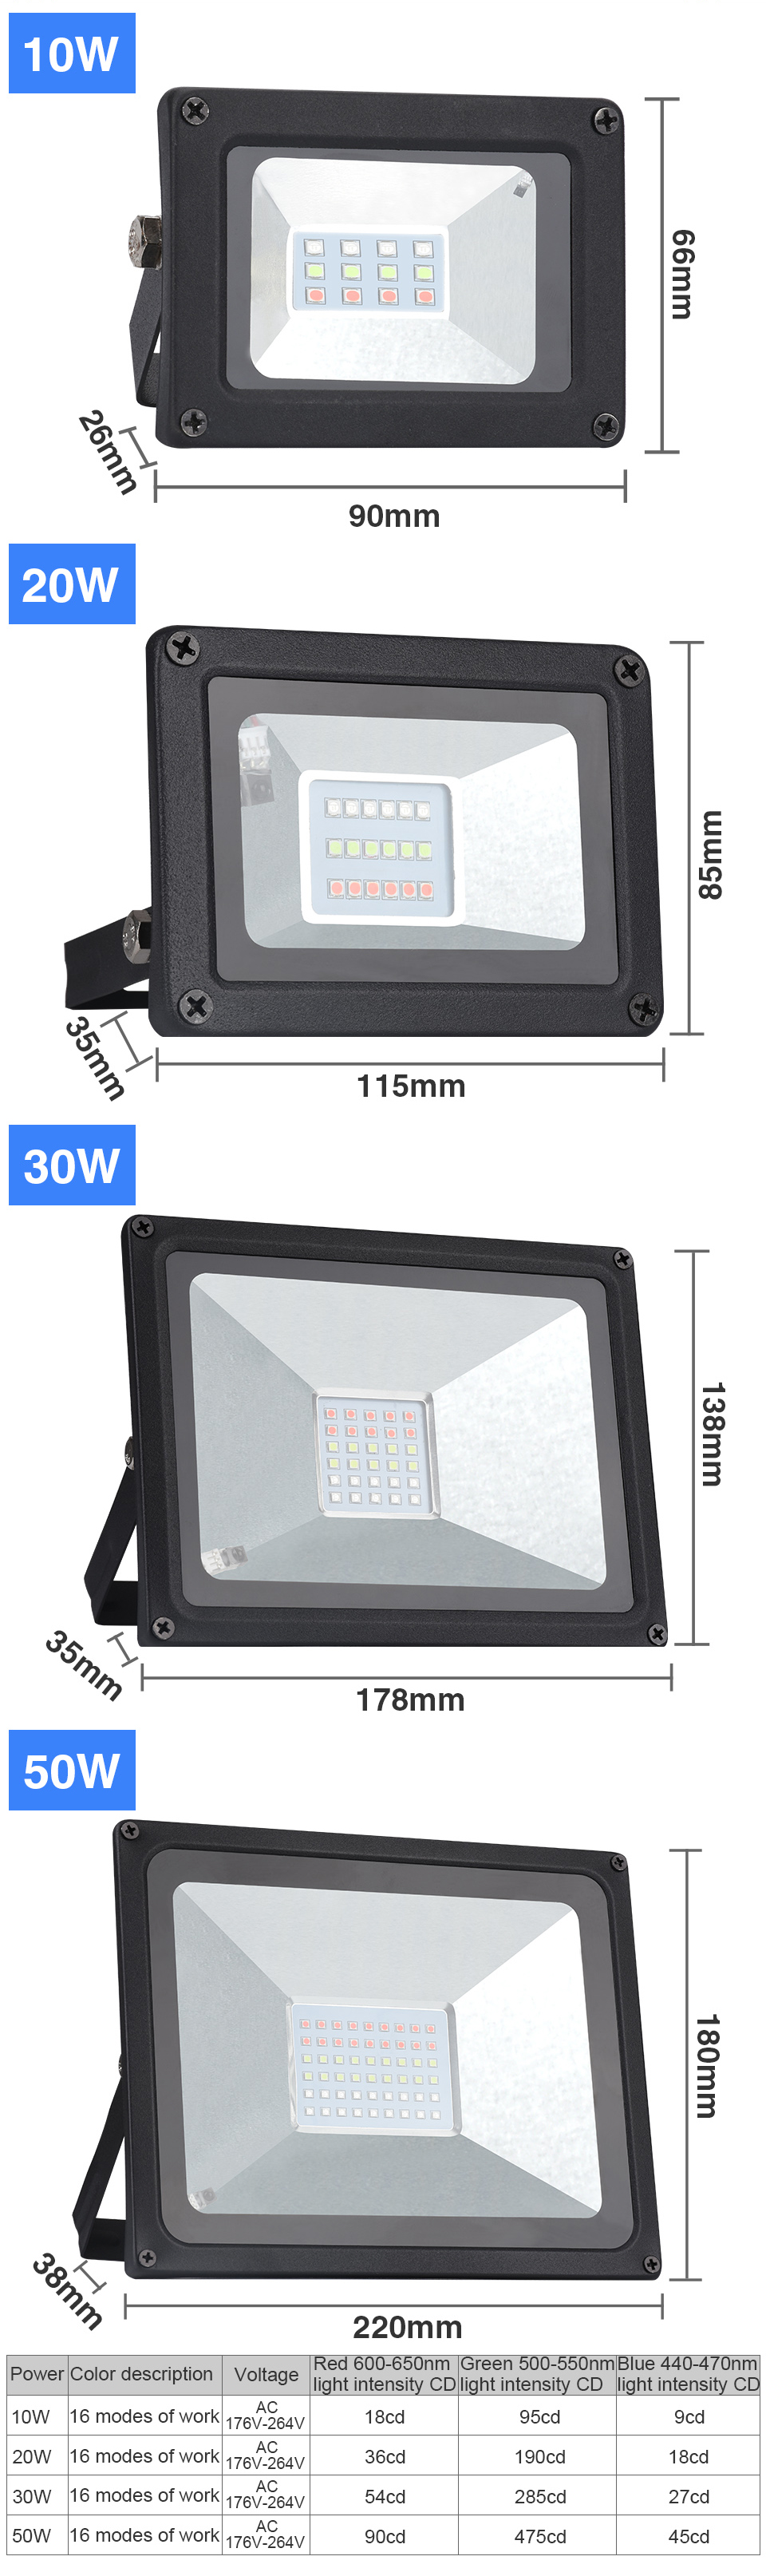 LED Flood Light RGB 30W 50W AC220V LED Outdoor Lighting Reflector Spot Floodlight With Remote Control